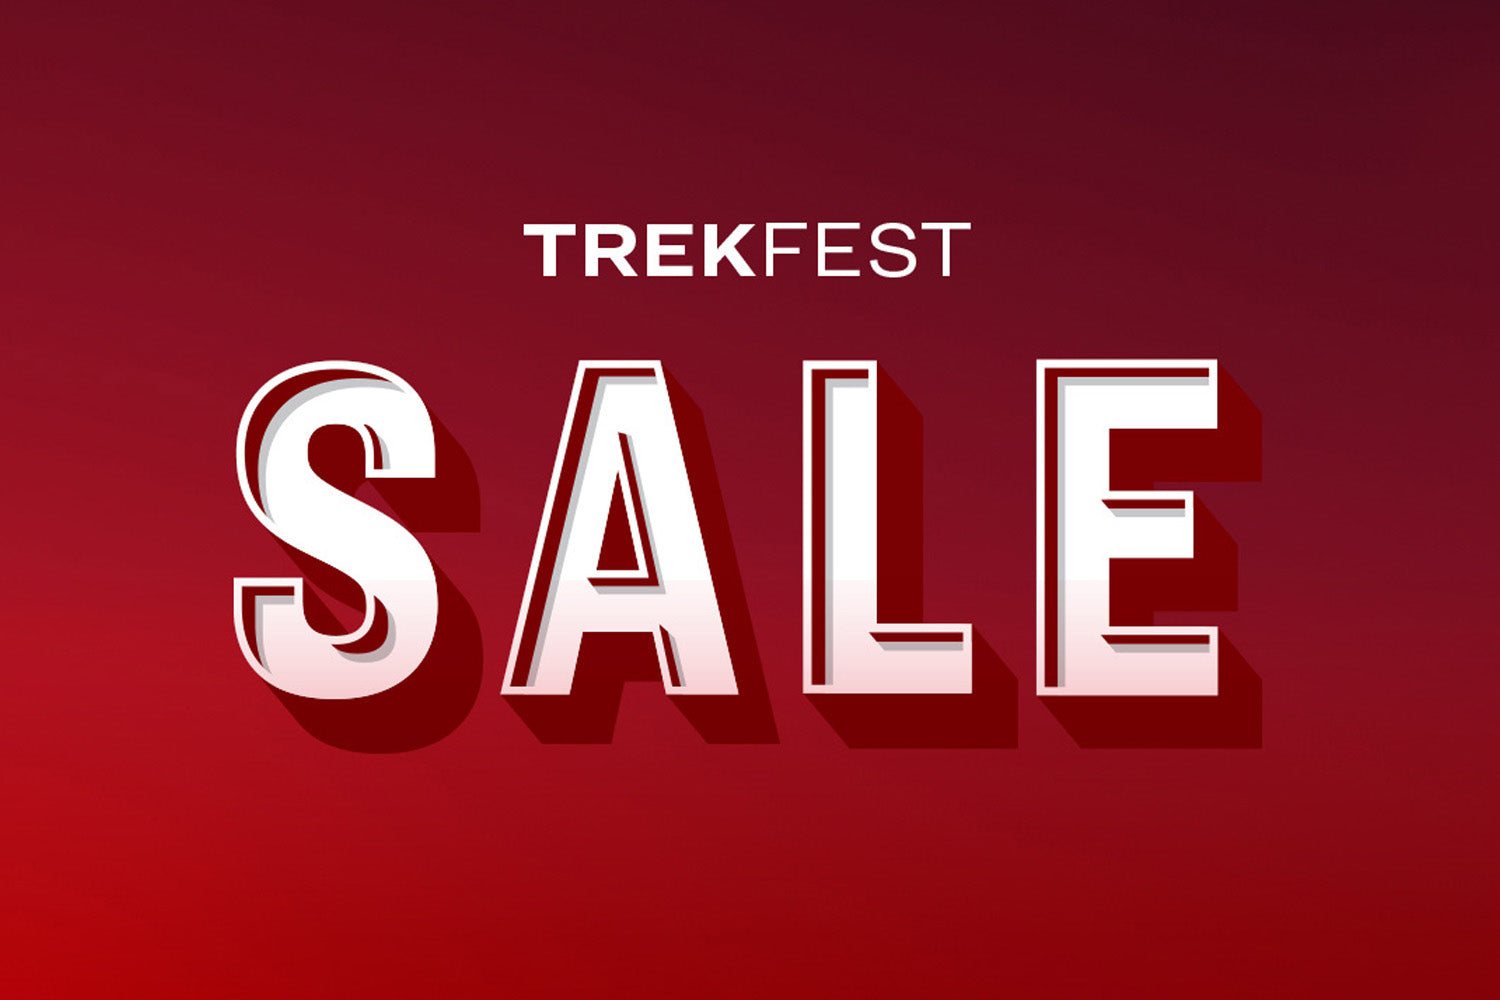 TrekFest Sale is on now!